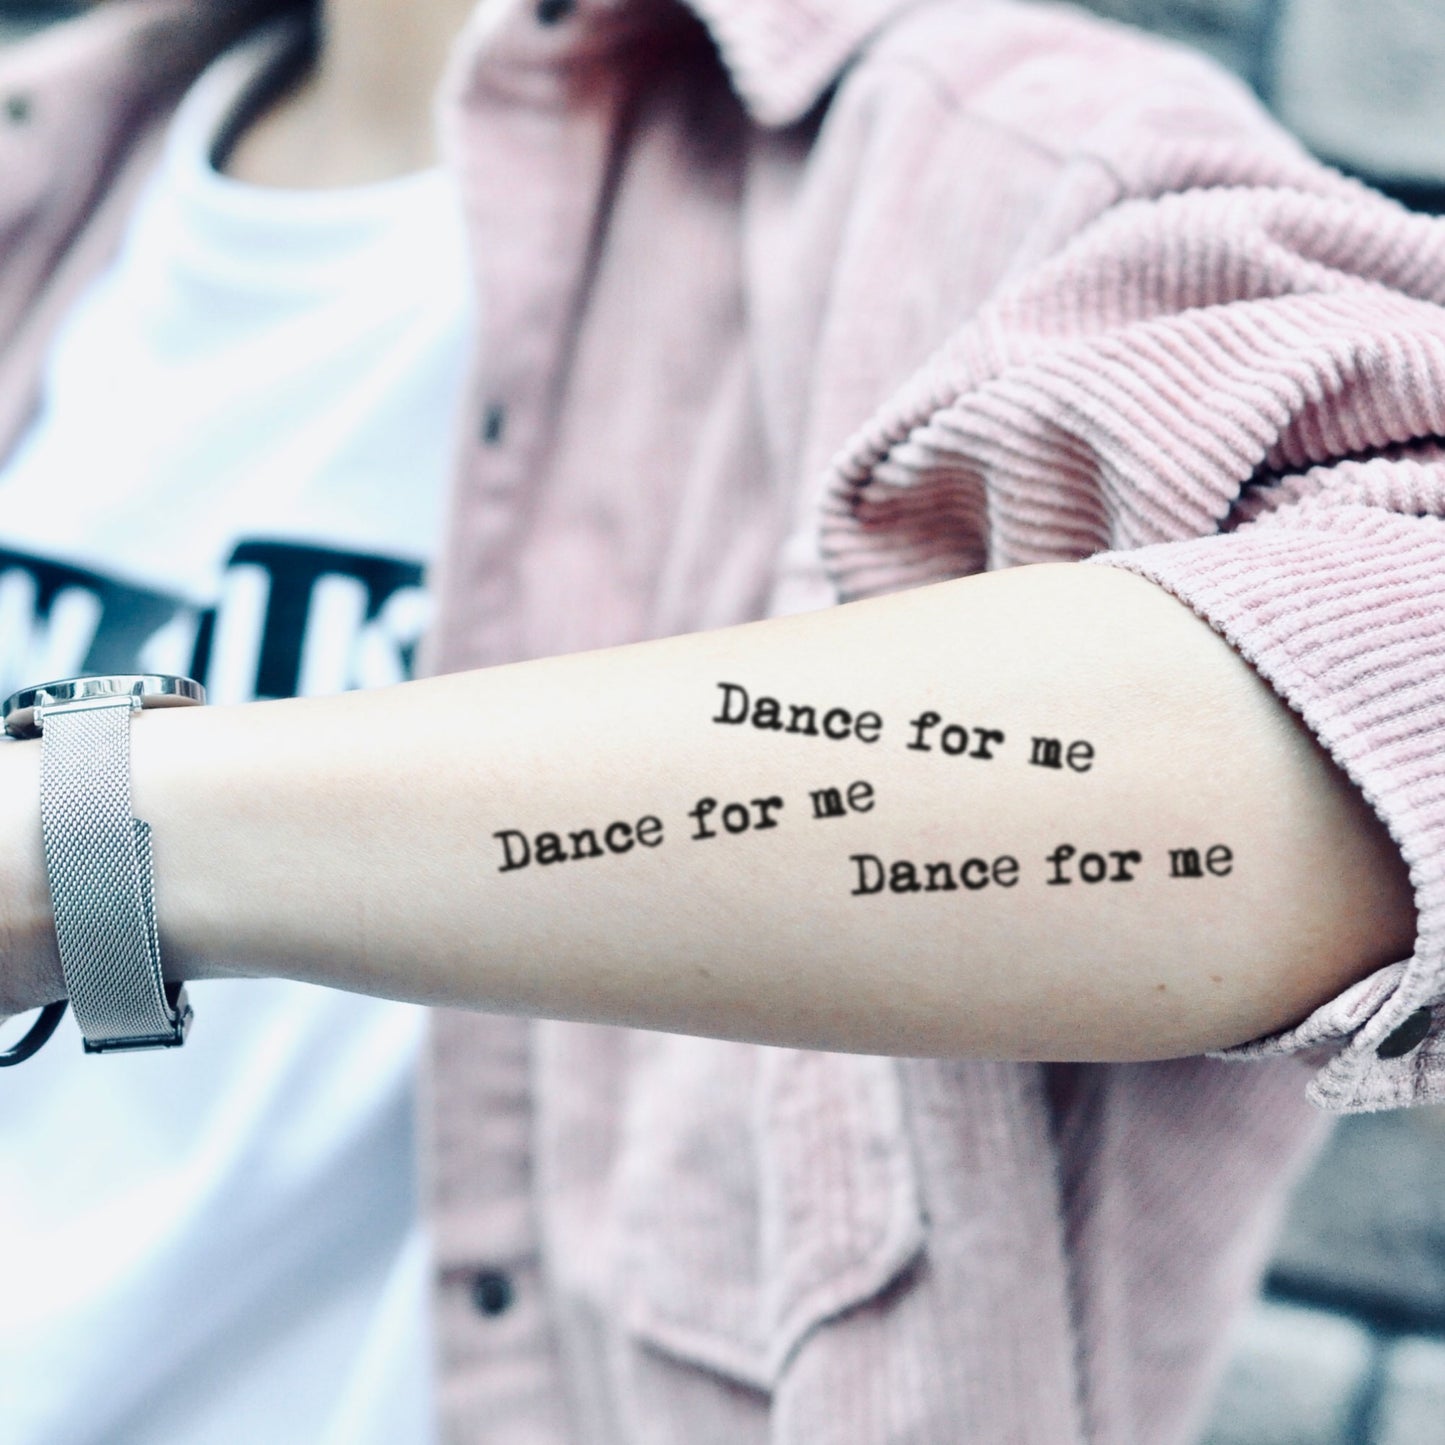 fake small tones and i dance monkey lyrics lettering temporary tattoo sticker design idea on arm